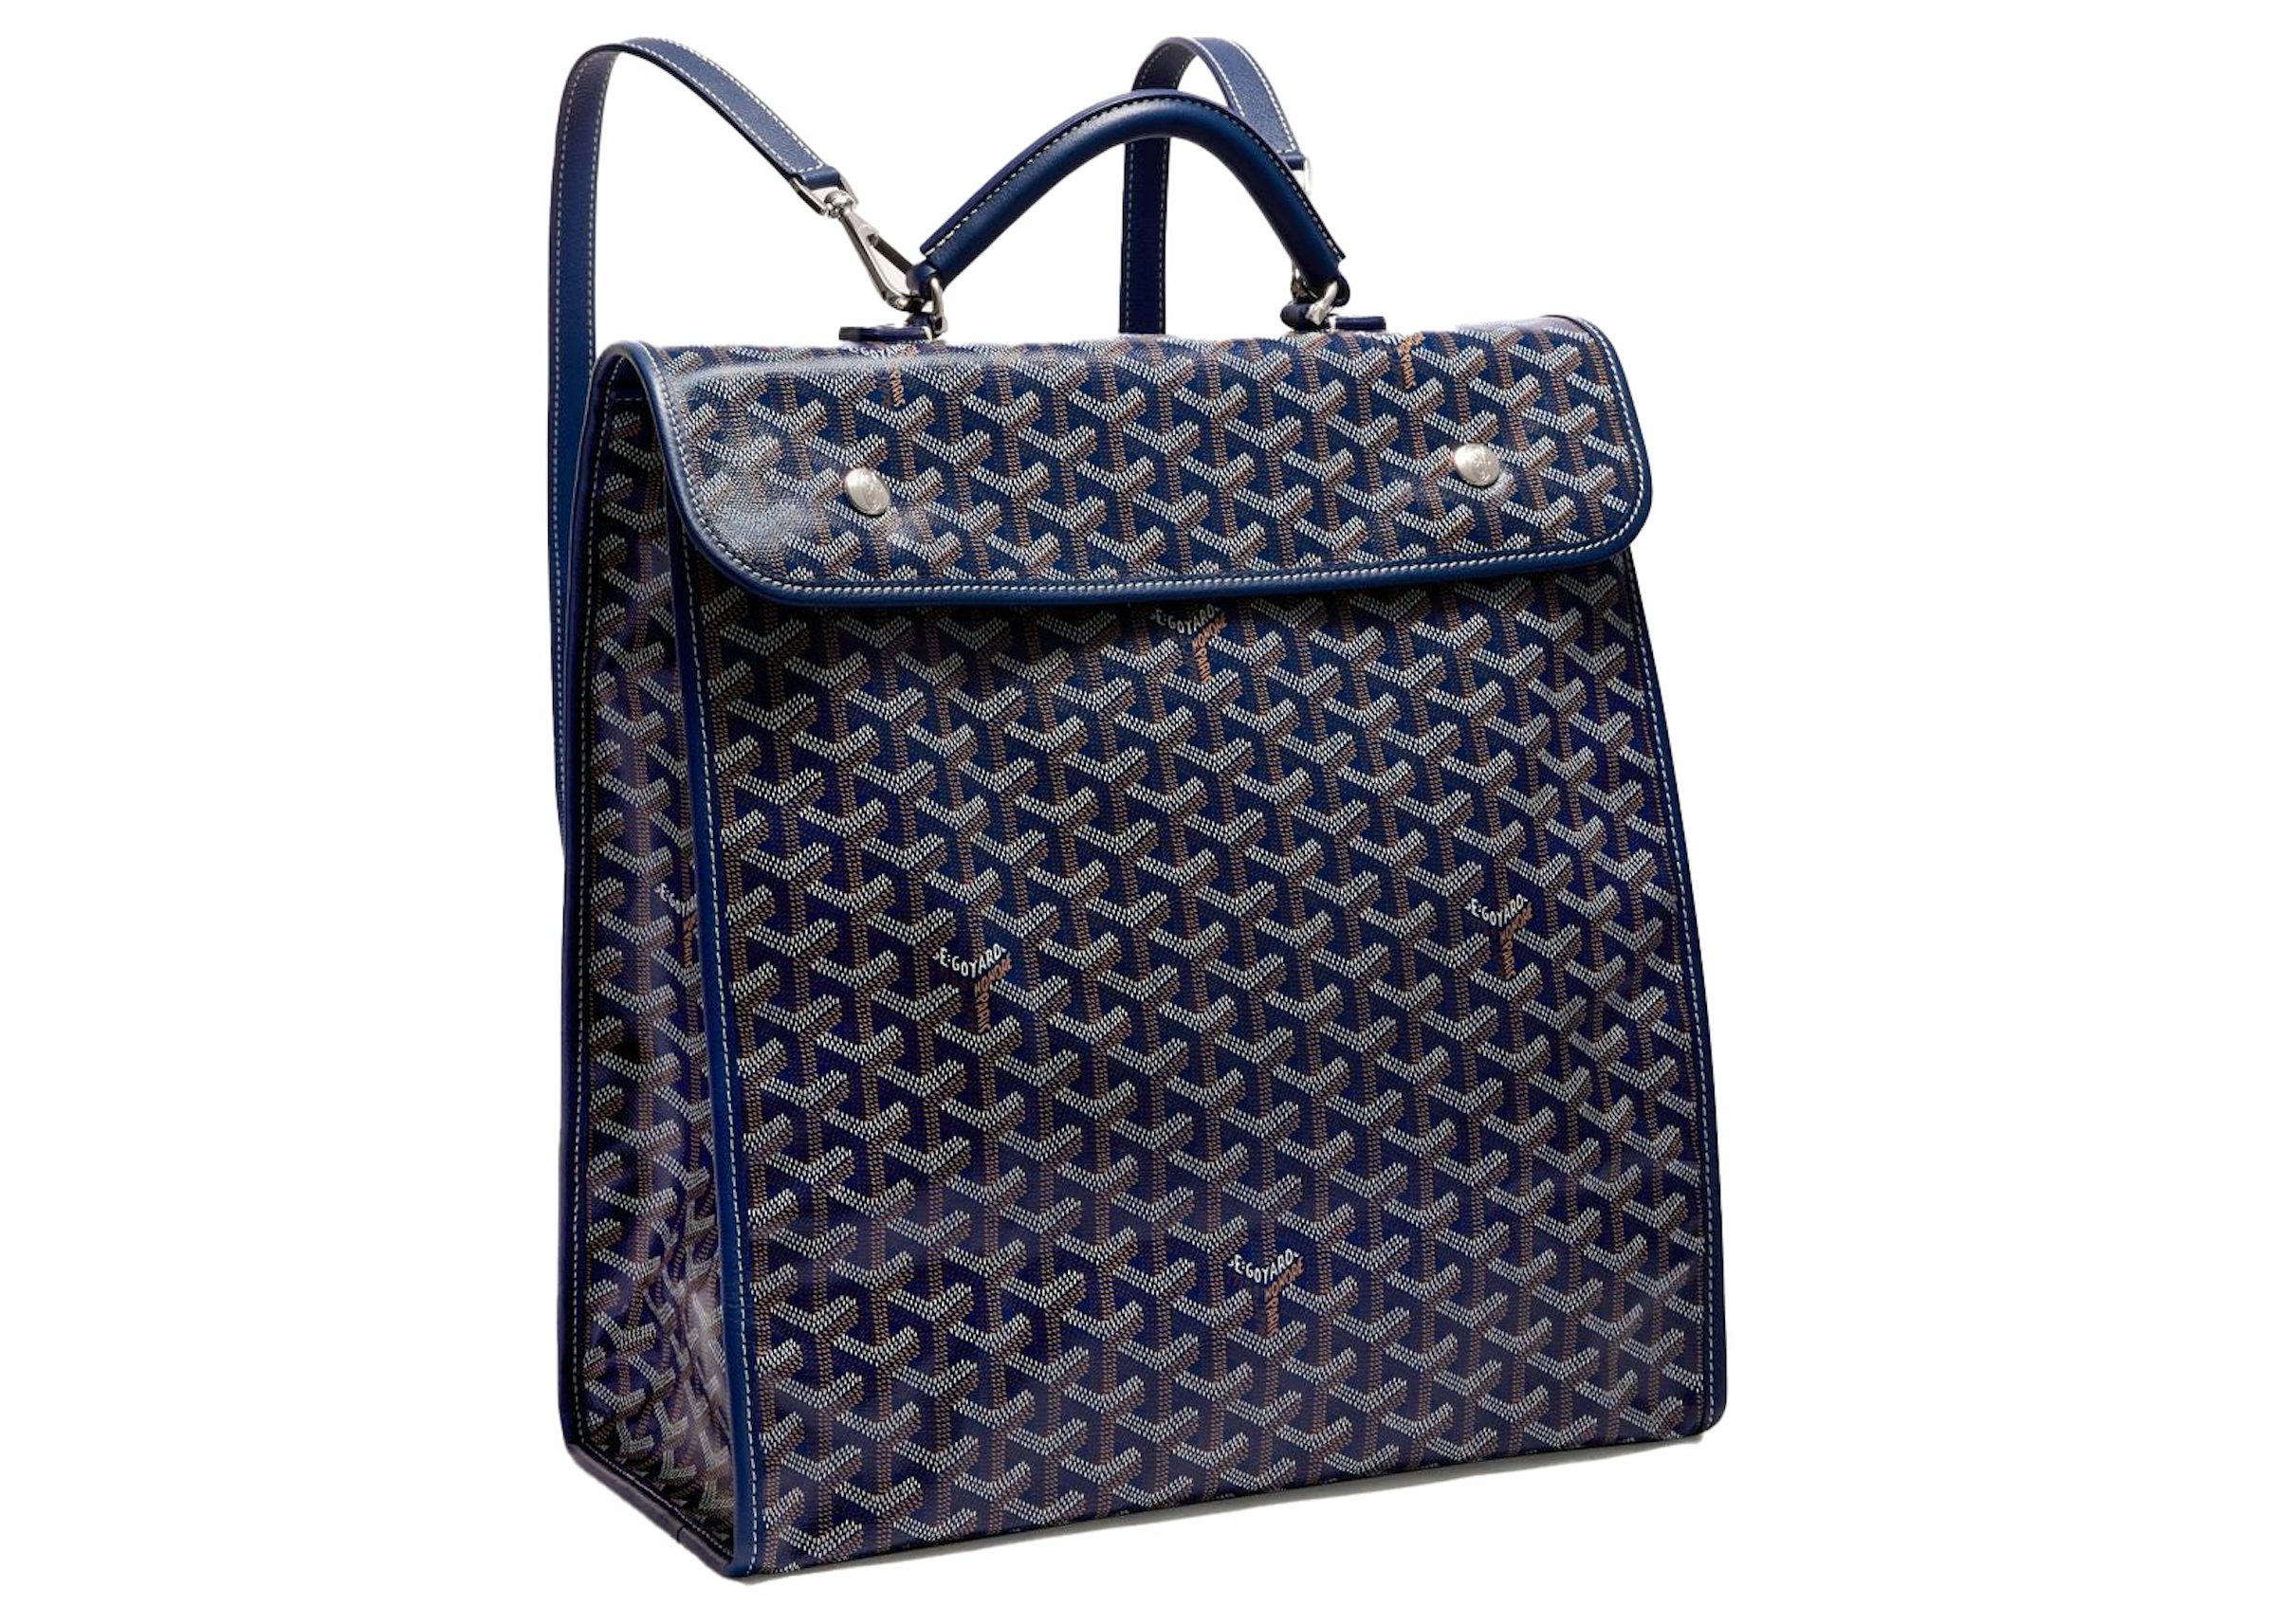 Goyard Saint Léger Backpack Navy Blue in Canvas/Calfskin Leather